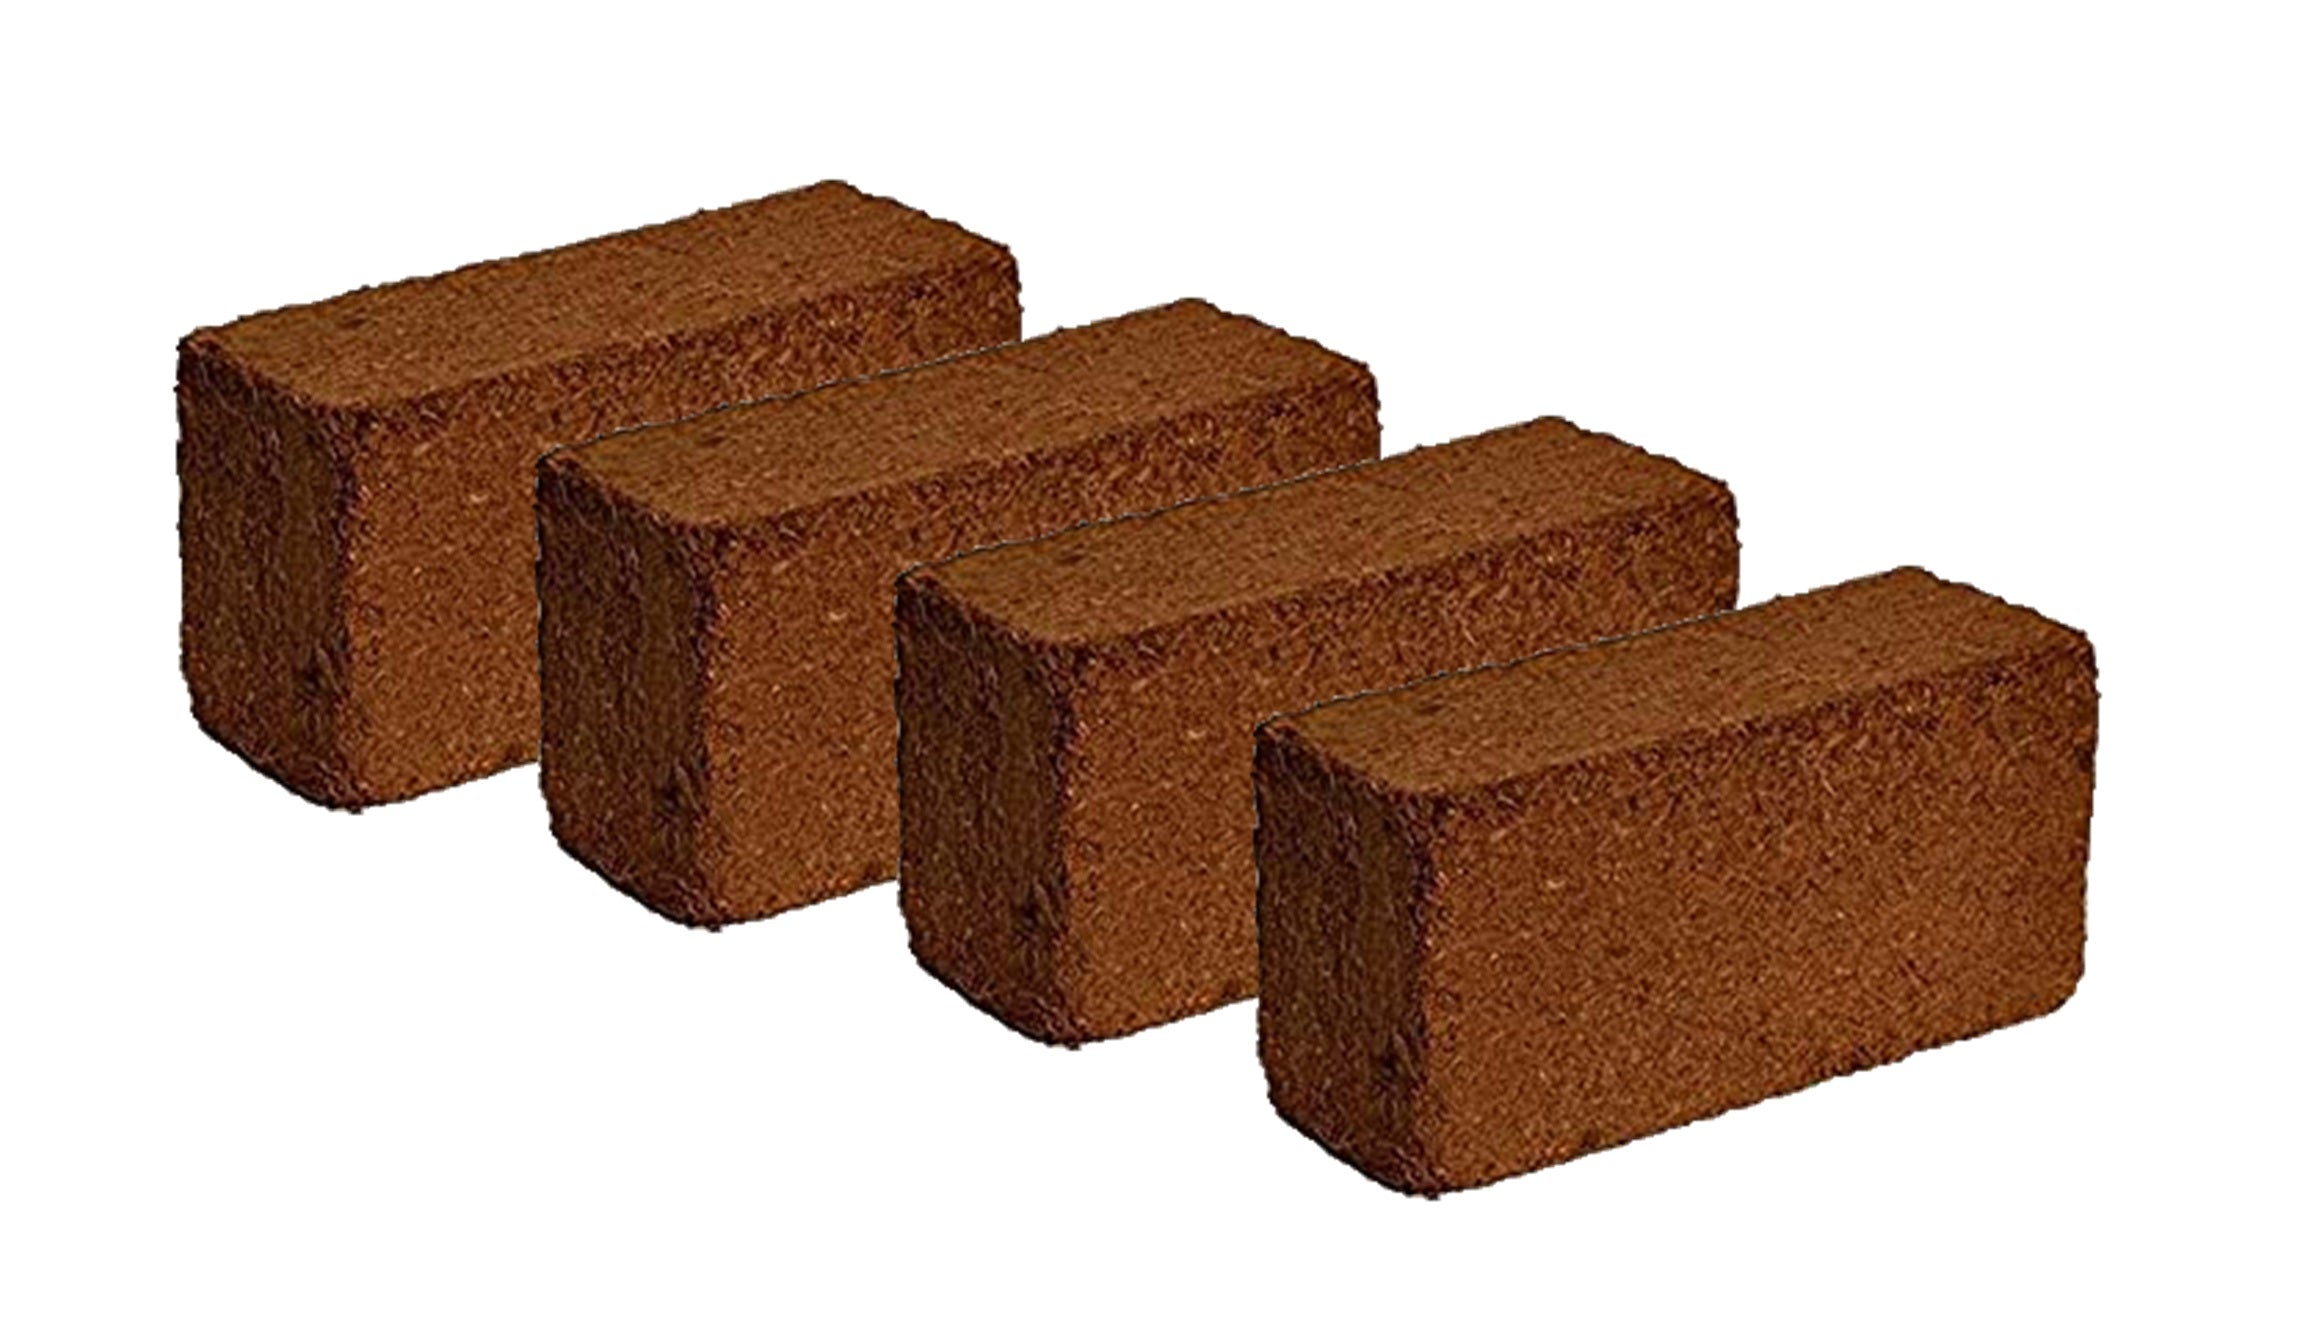 Coco coir Growing Medium - Compressed Block Brick - aka Coco Soil, Cocosoil, Coco Peat, Coir Block - Soil Alternative